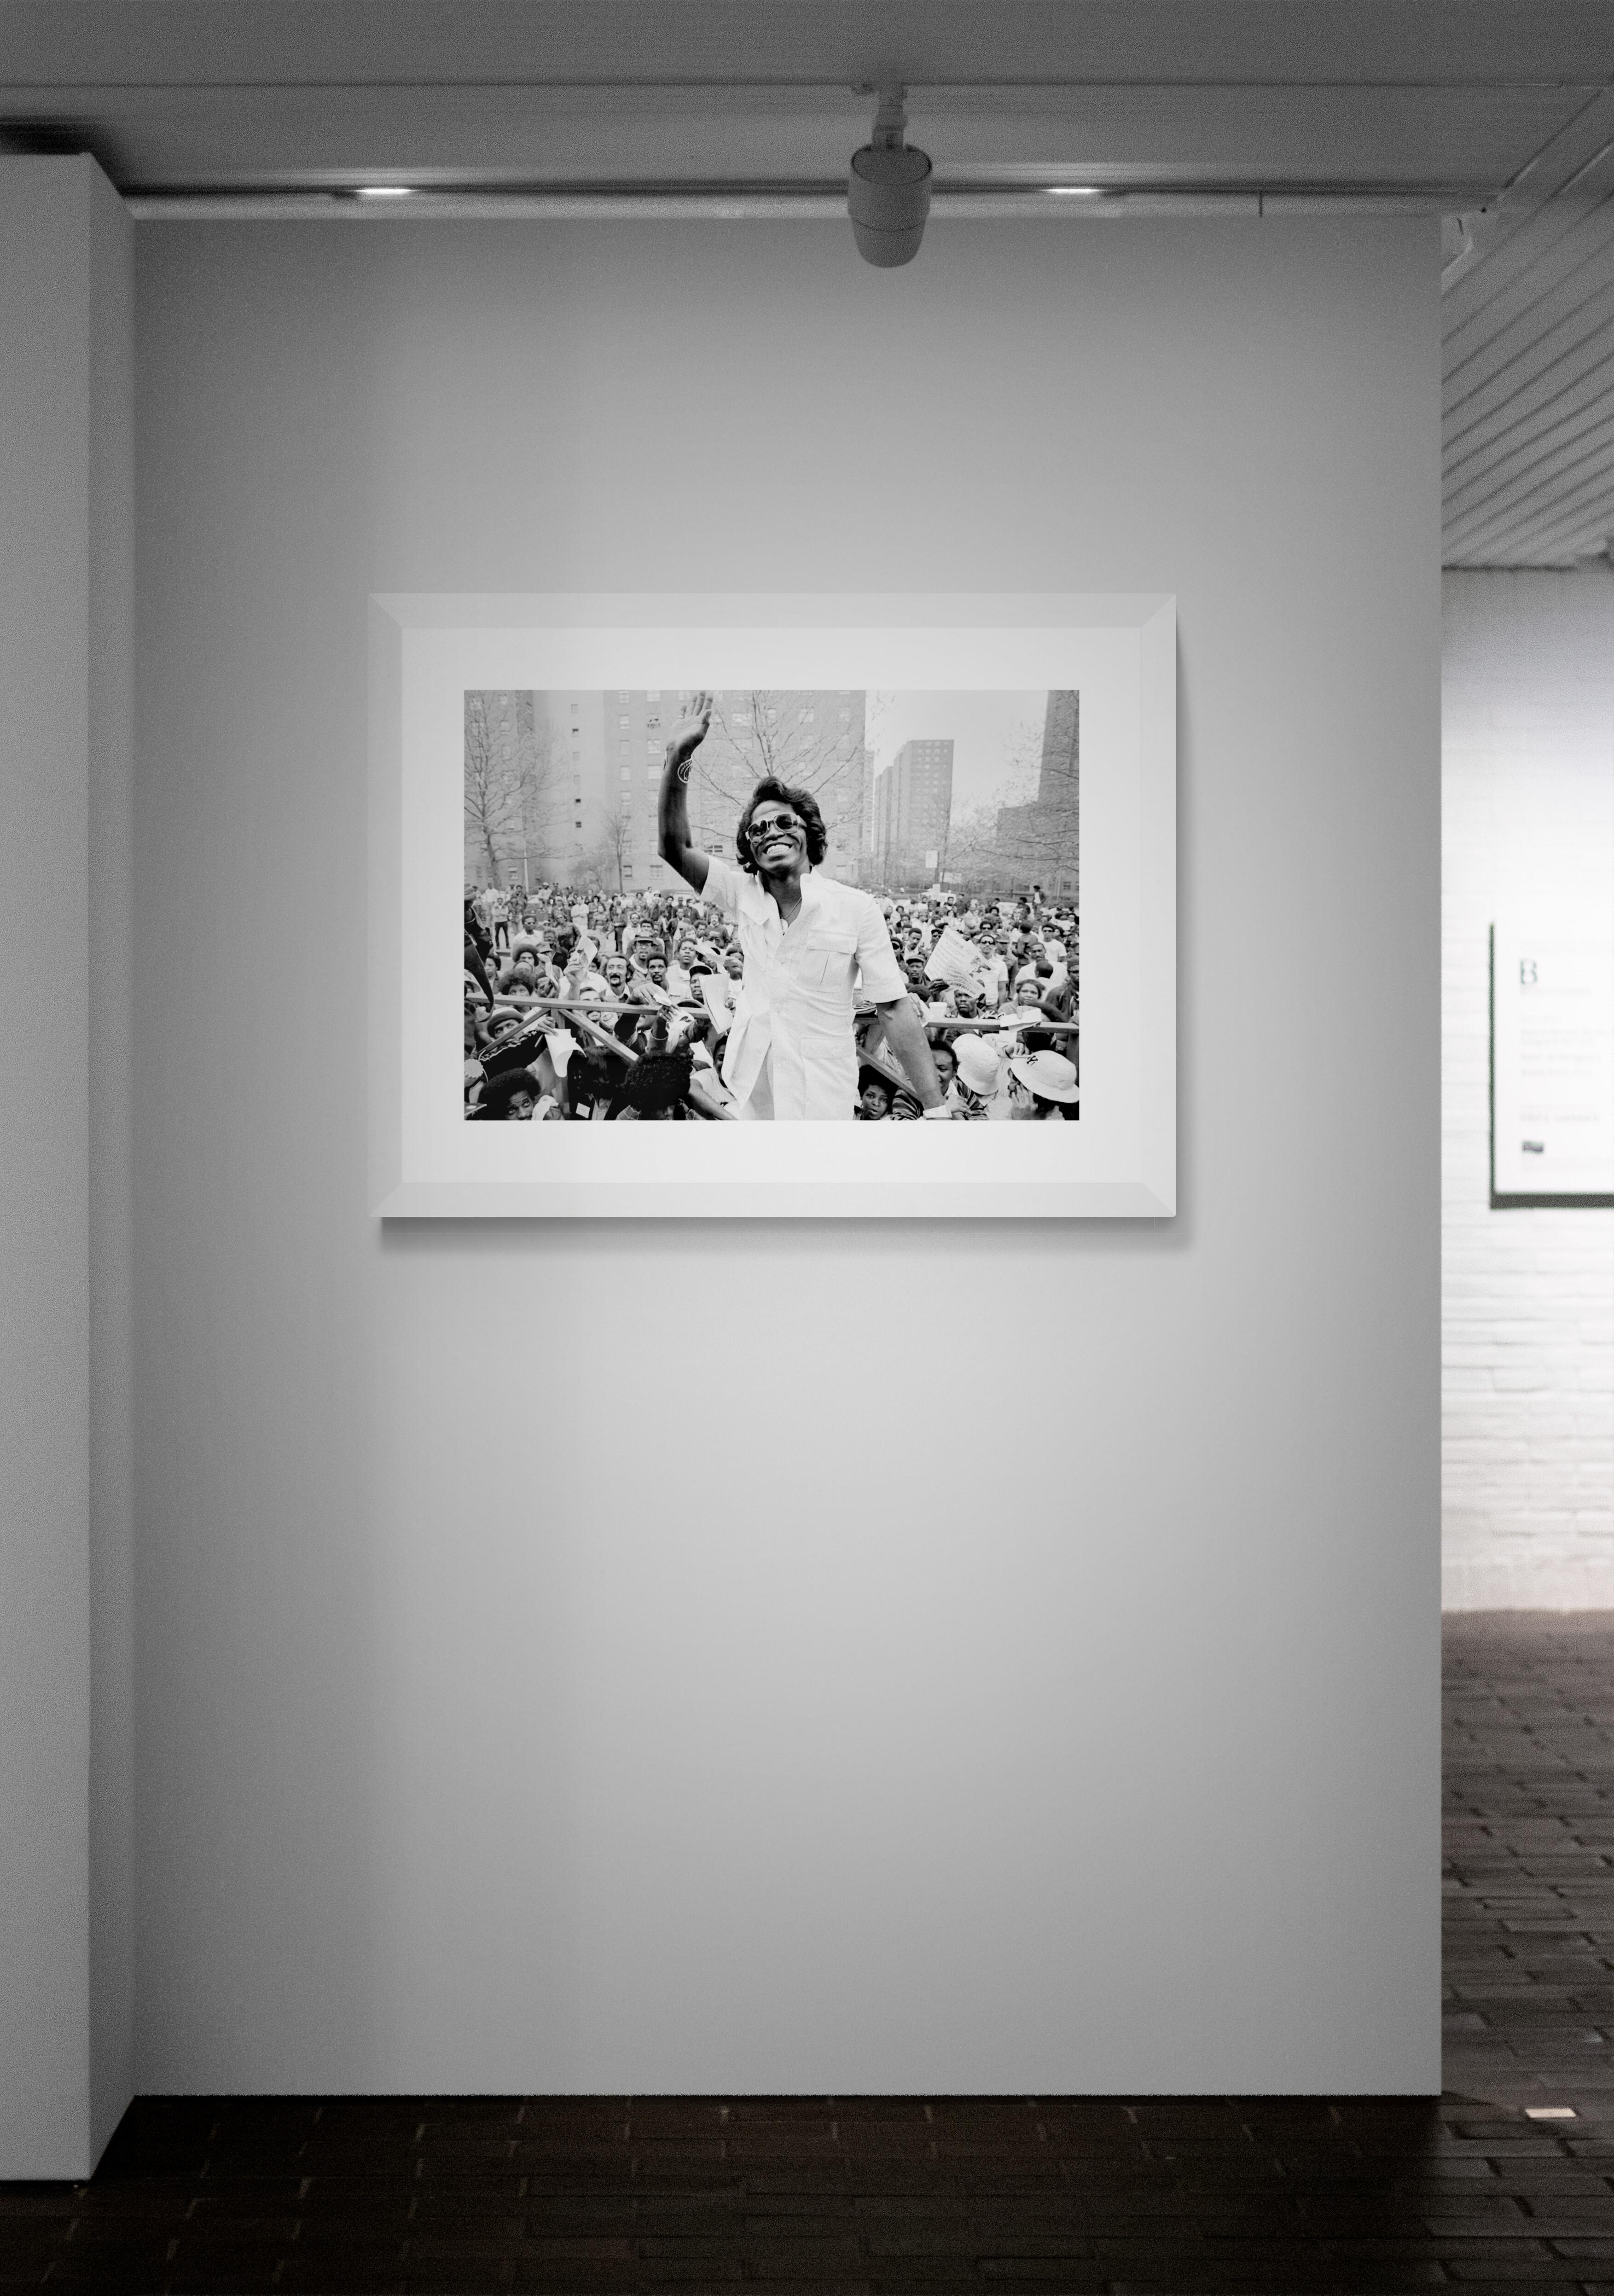 James Brown #1 Foto (Grau), Black and White Photograph, von Richard E. Aaron